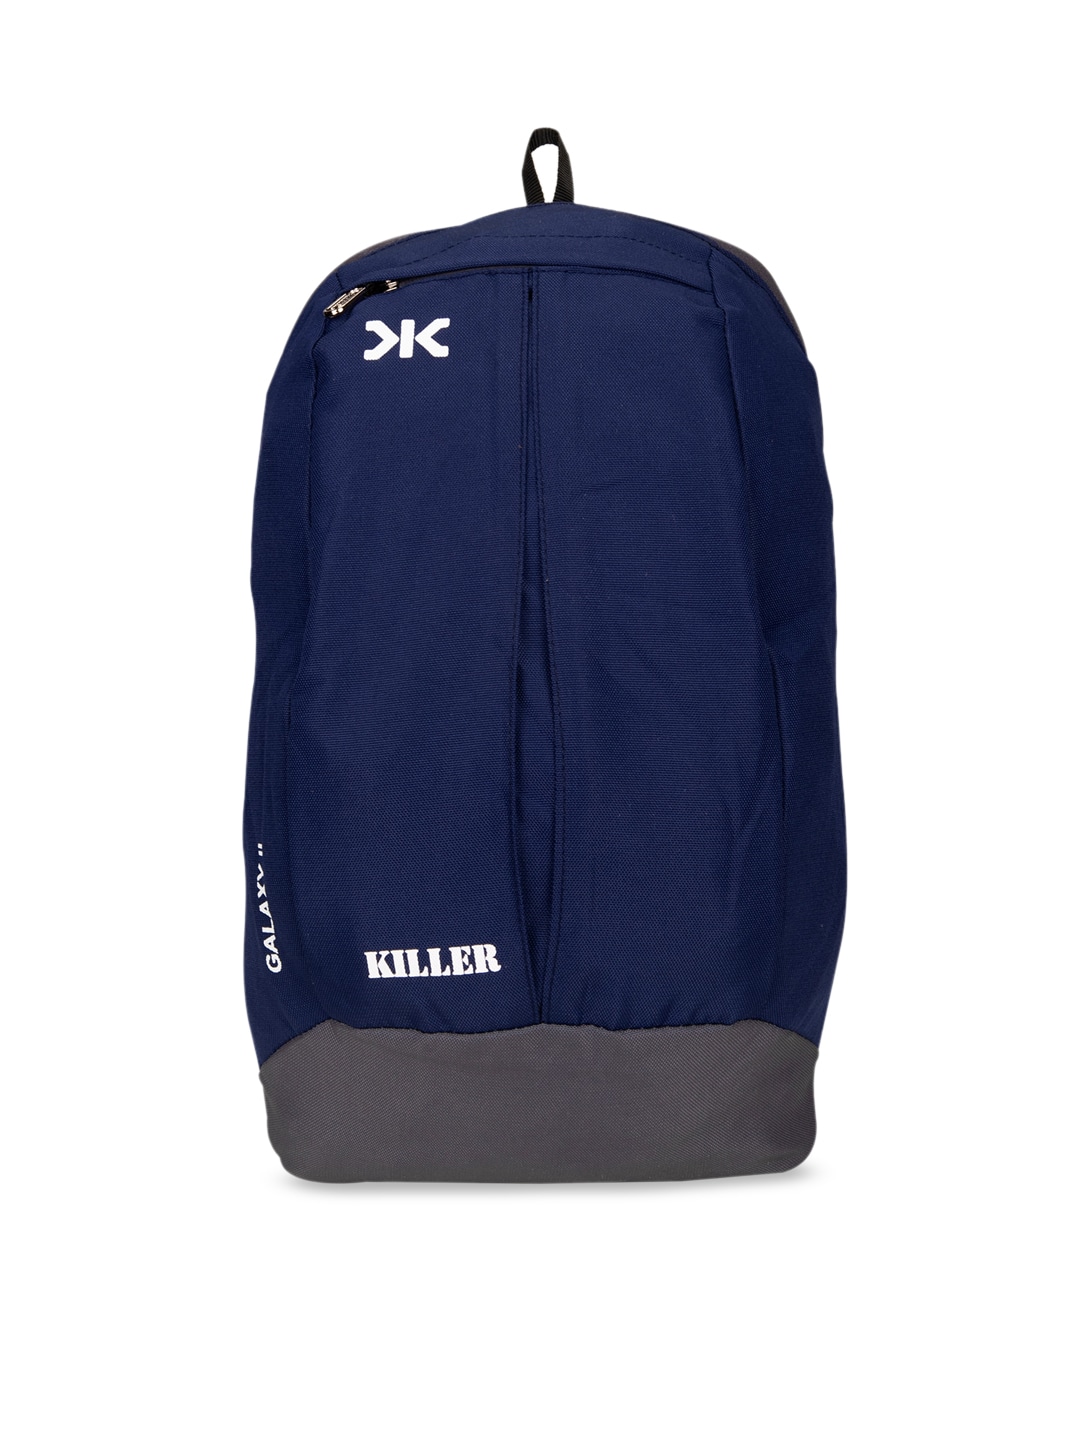 Killer Unisex Navy Blue & Grey Colourblocked Medium Backpack Price in India